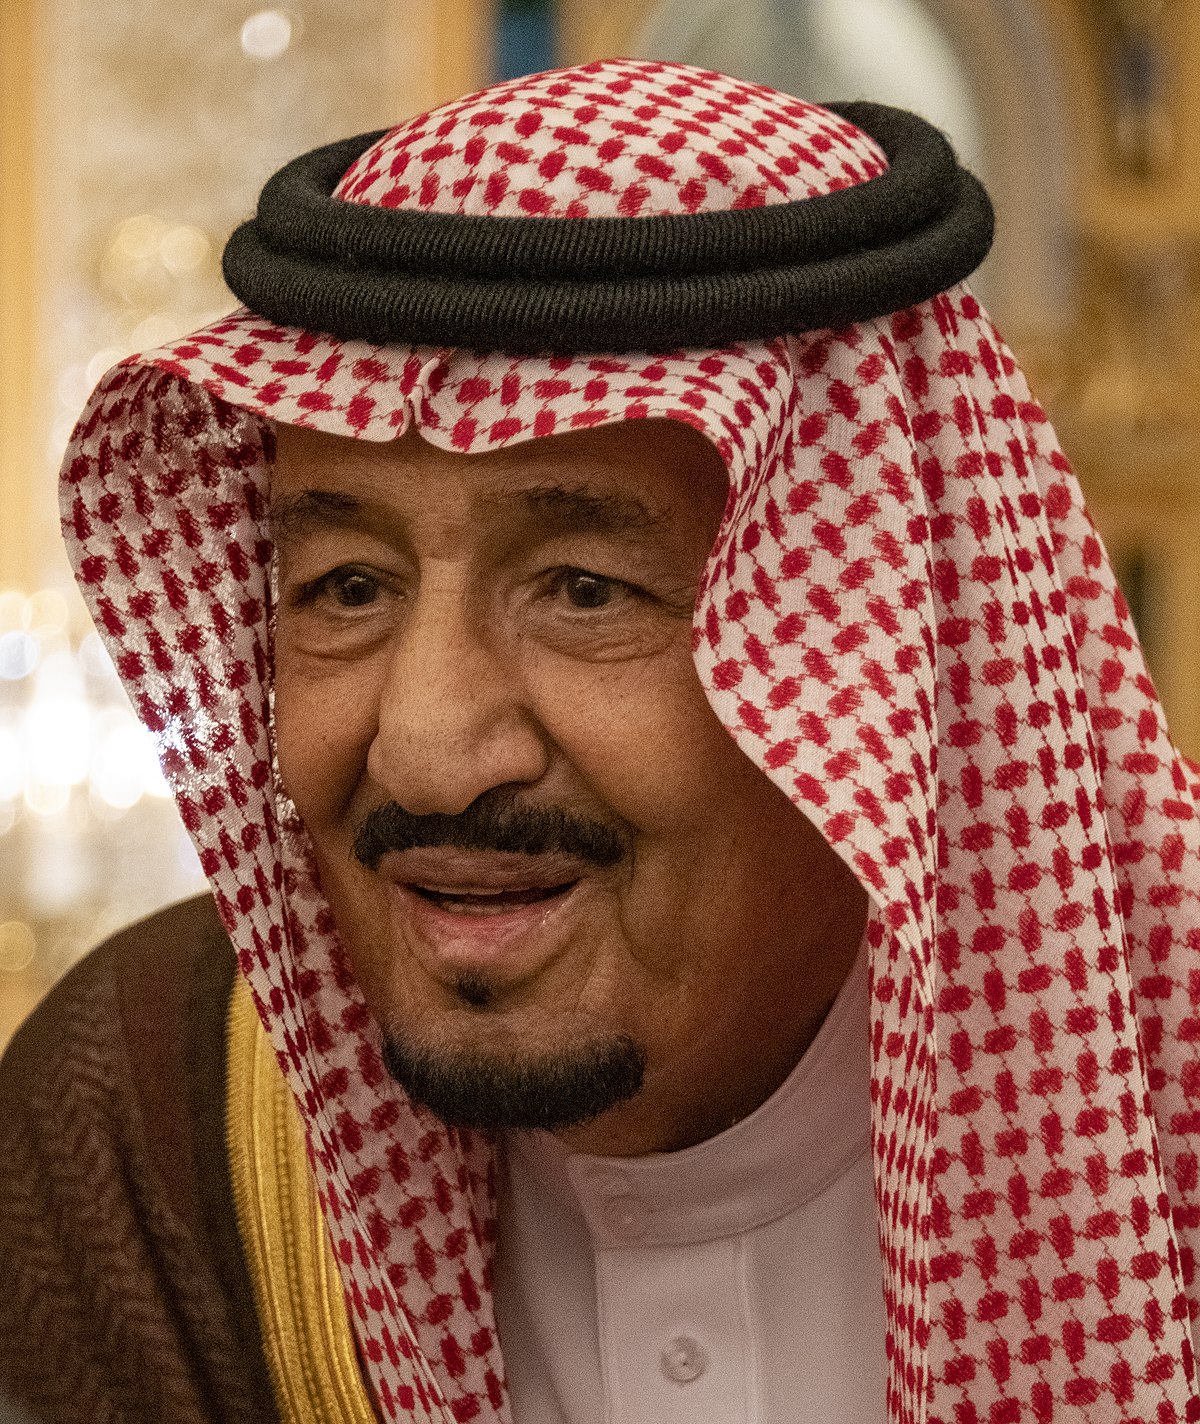 Raja arab saudi sekarang